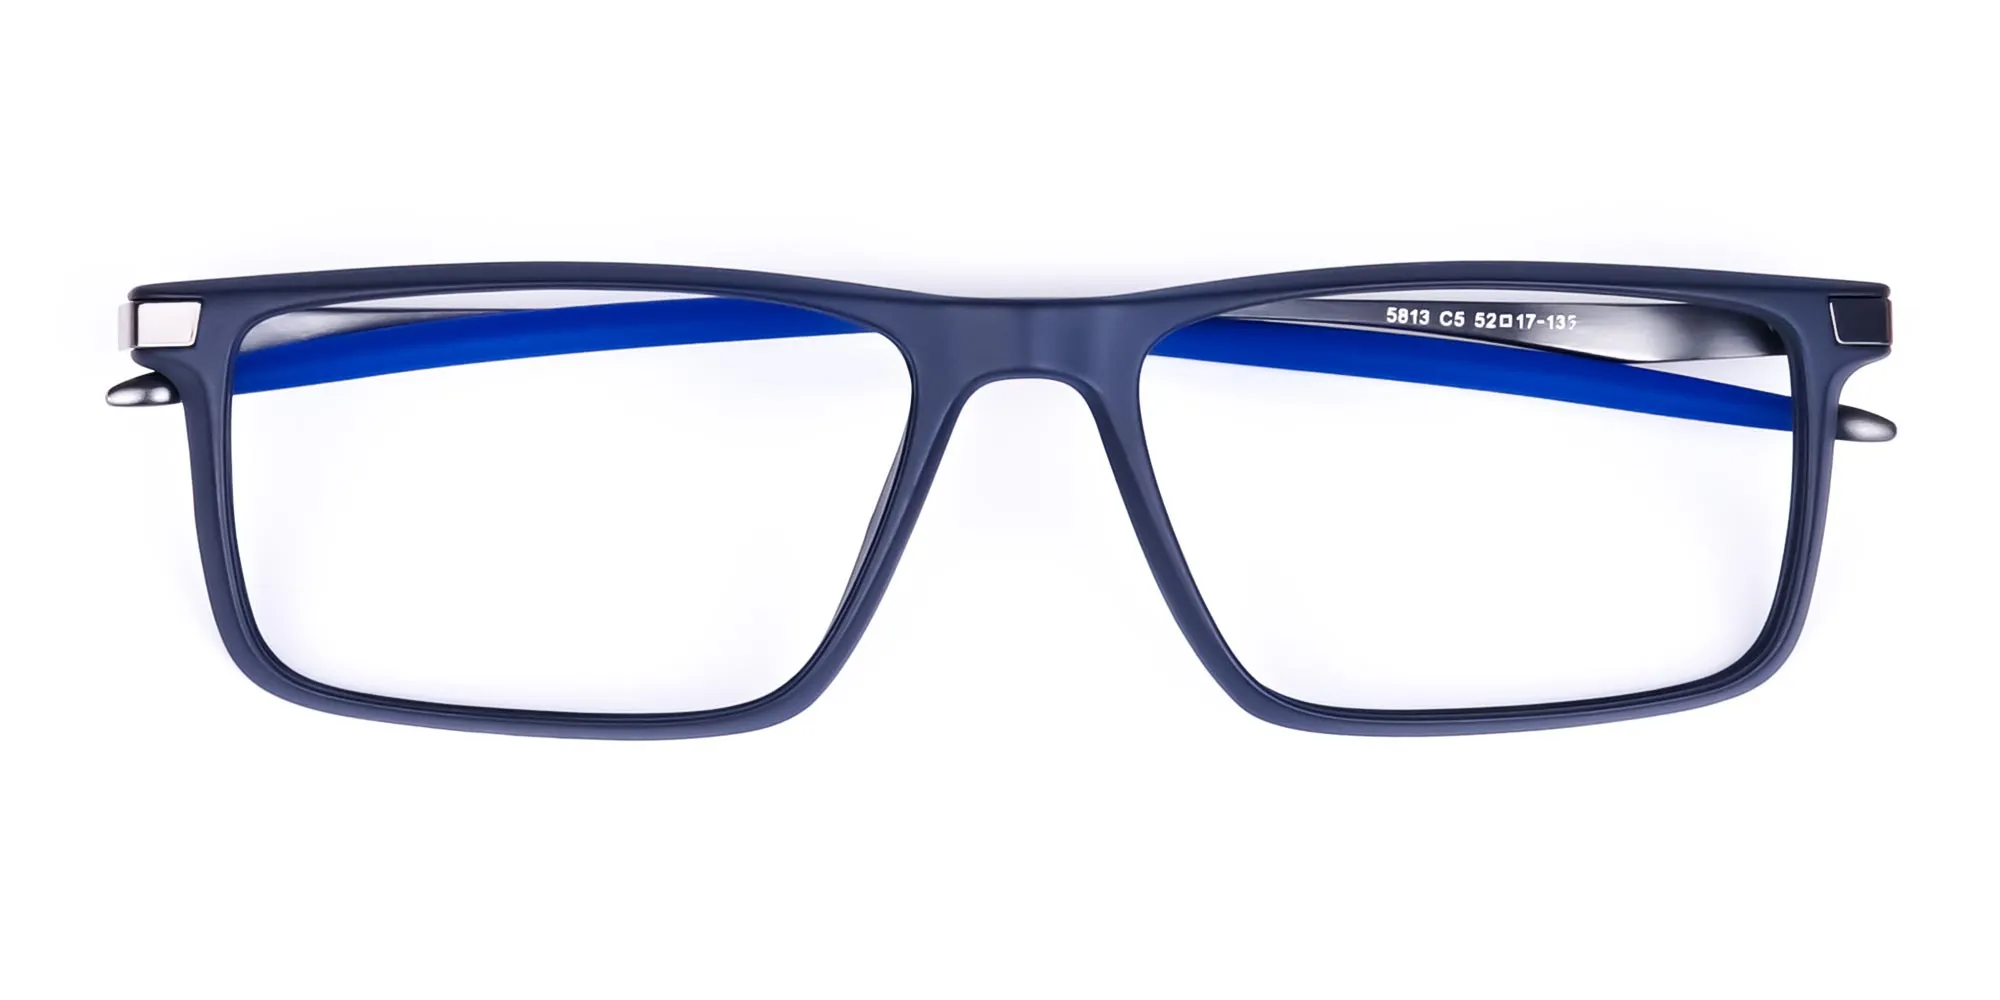 Blue and Black Prescription Football Glasses - 2